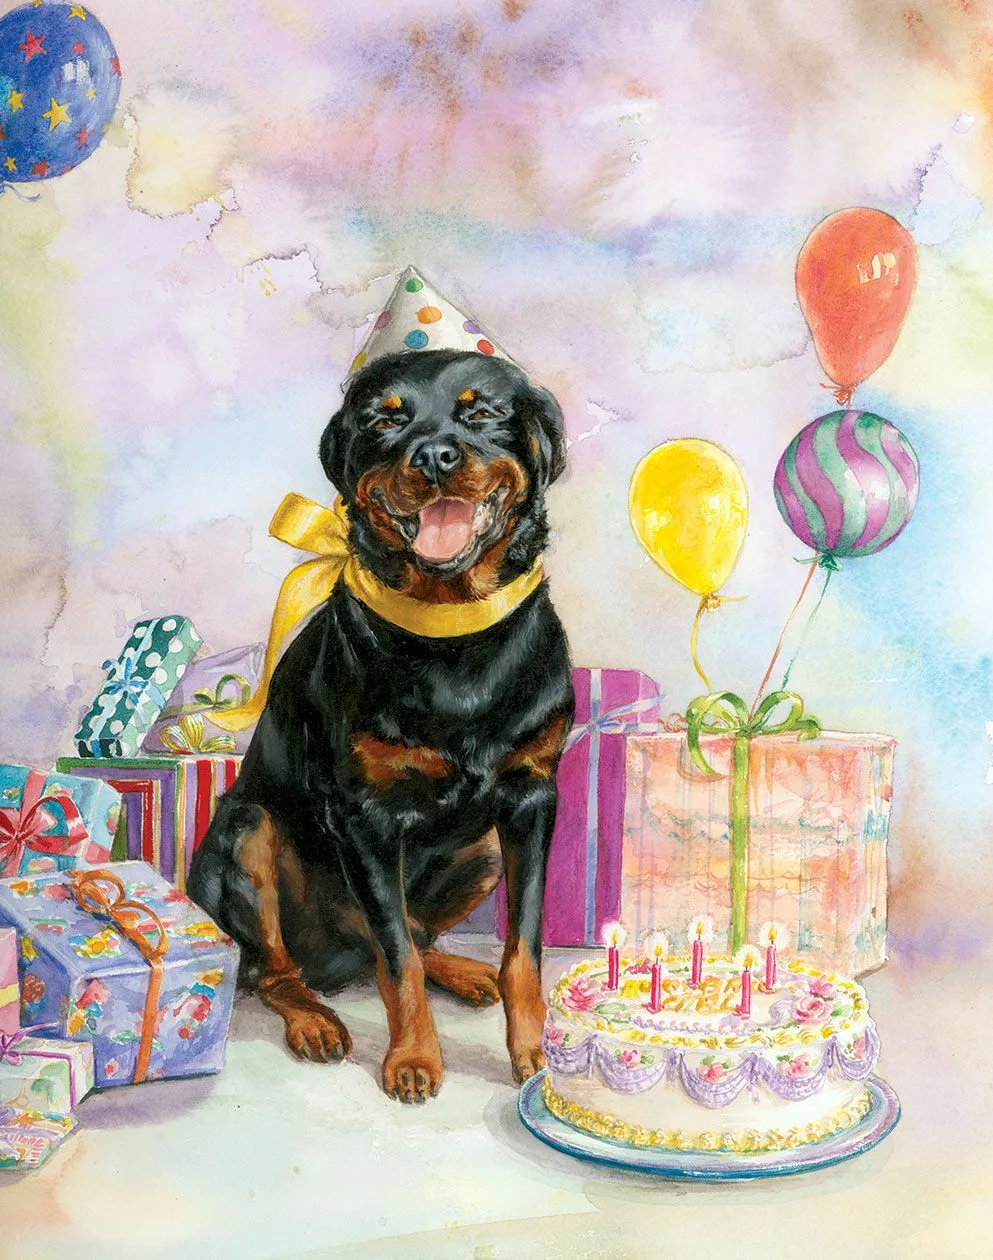 Фото Happy birthday greetings to the dog #12